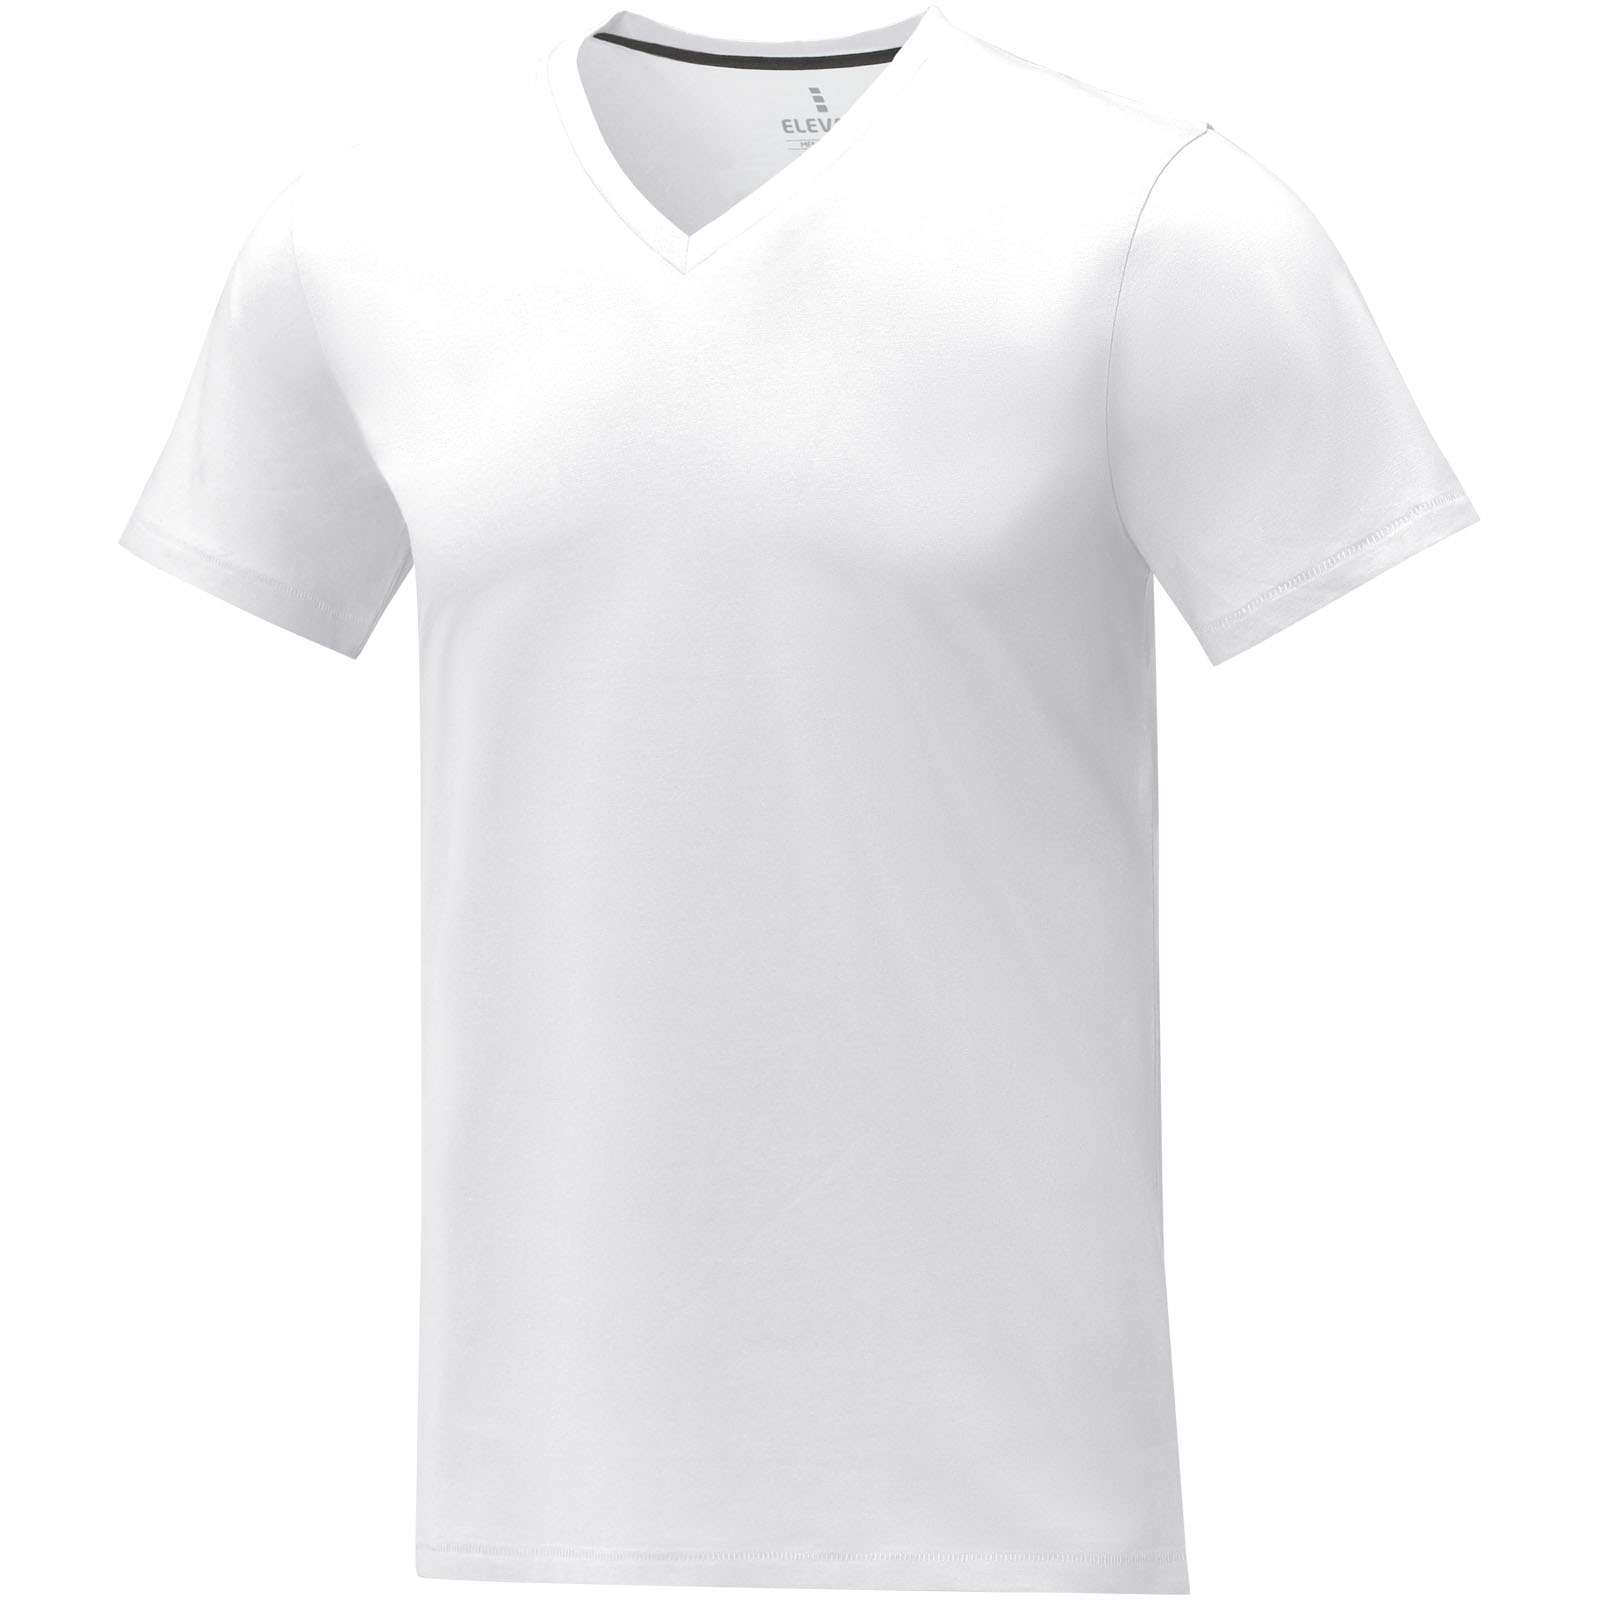 Advertising T-shirts - Somoto short sleeve men's V-neck t-shirt 